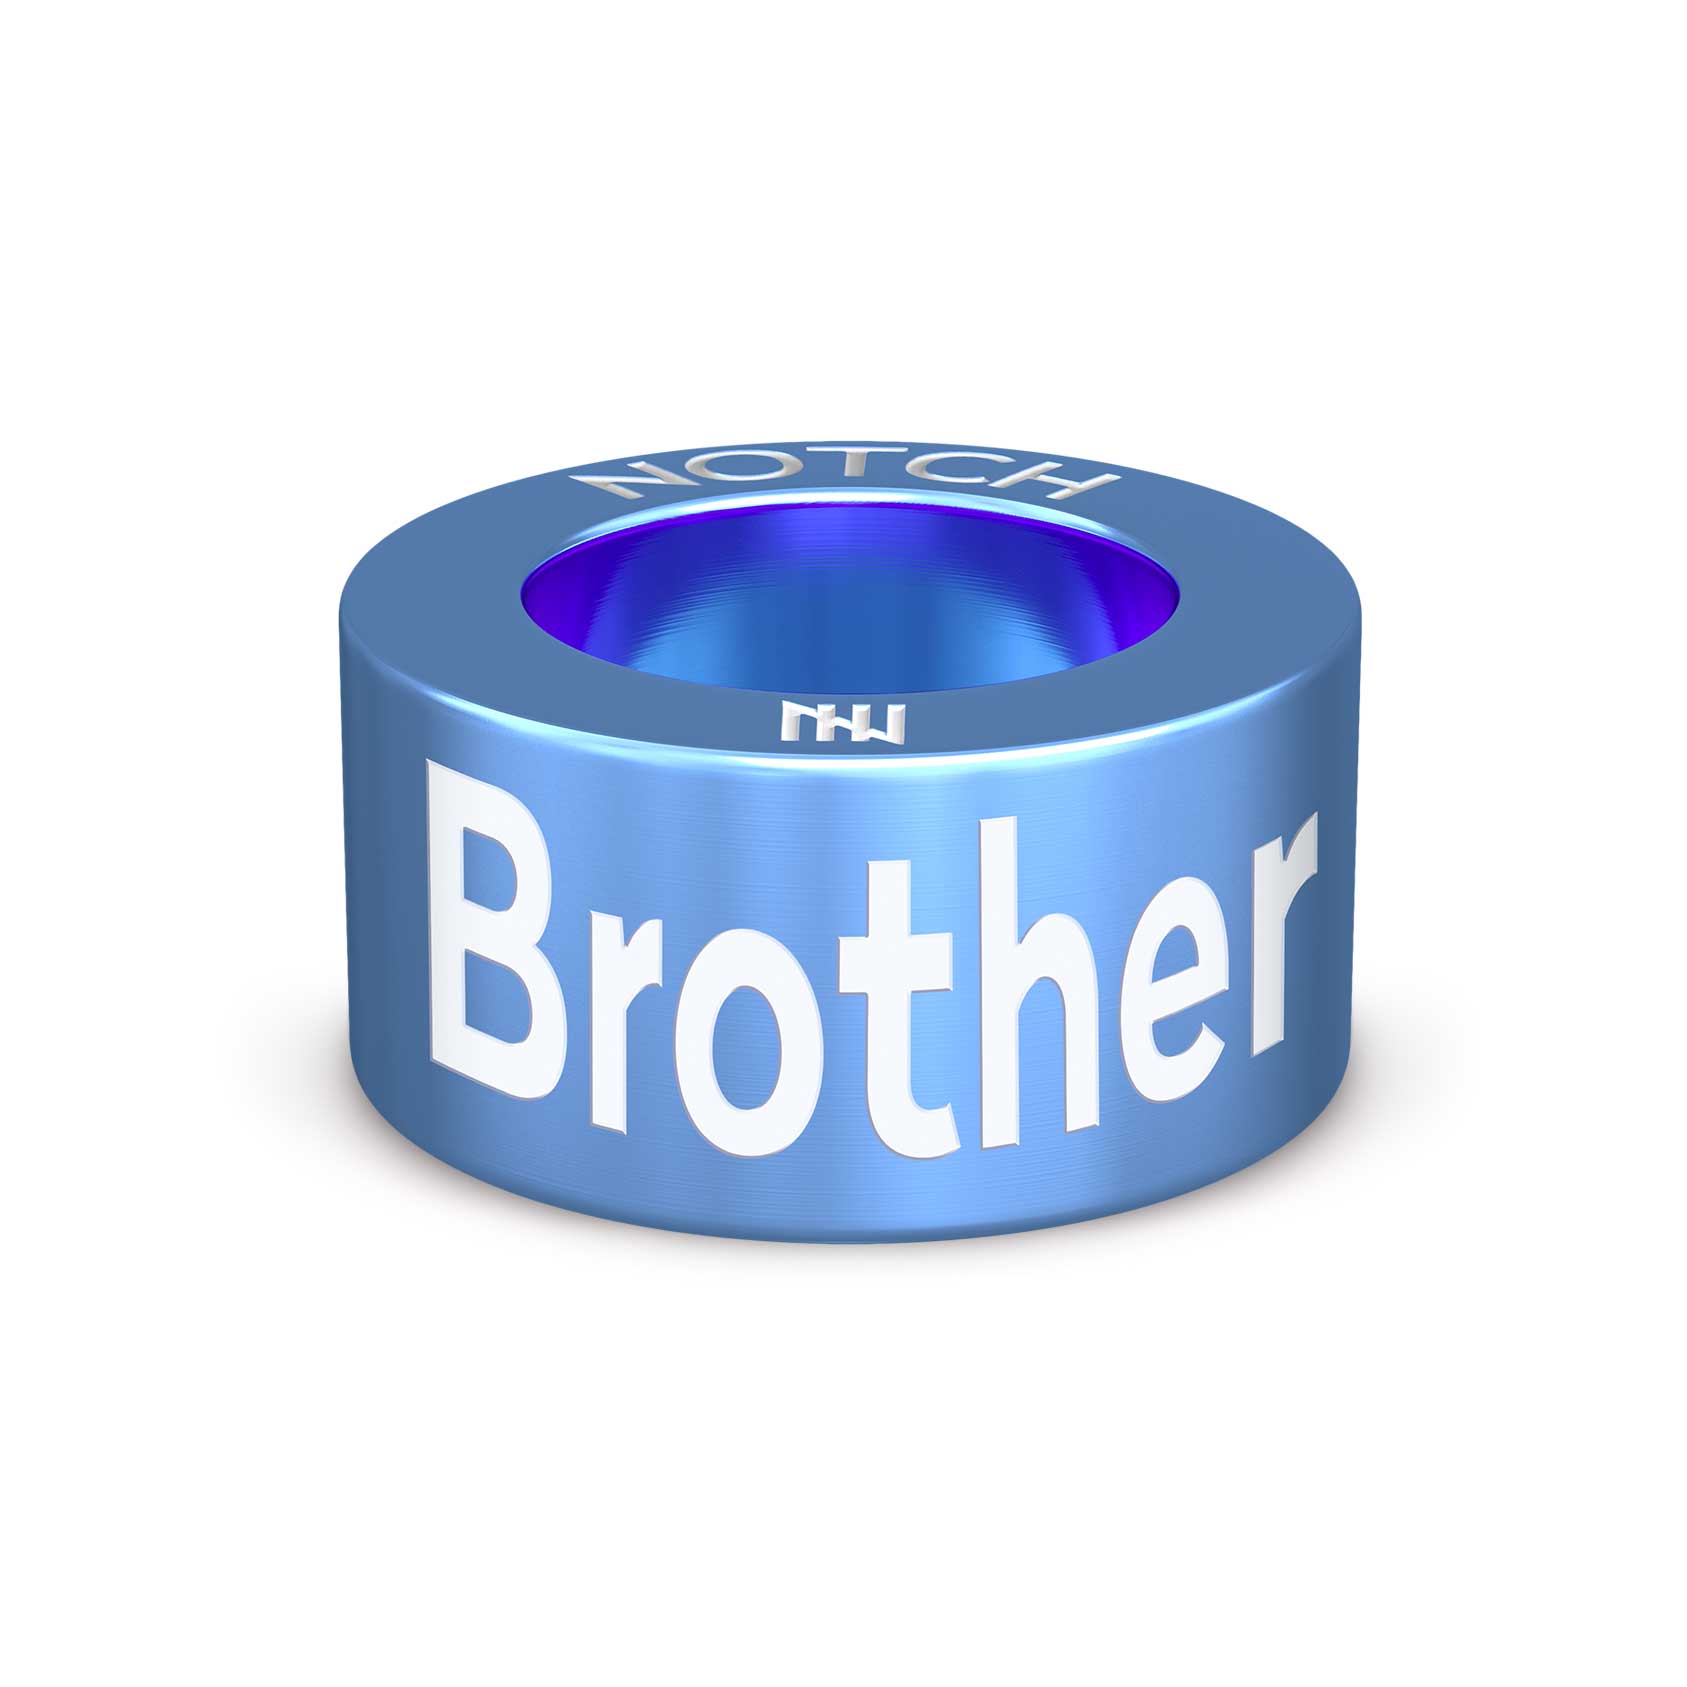 Brother Notch